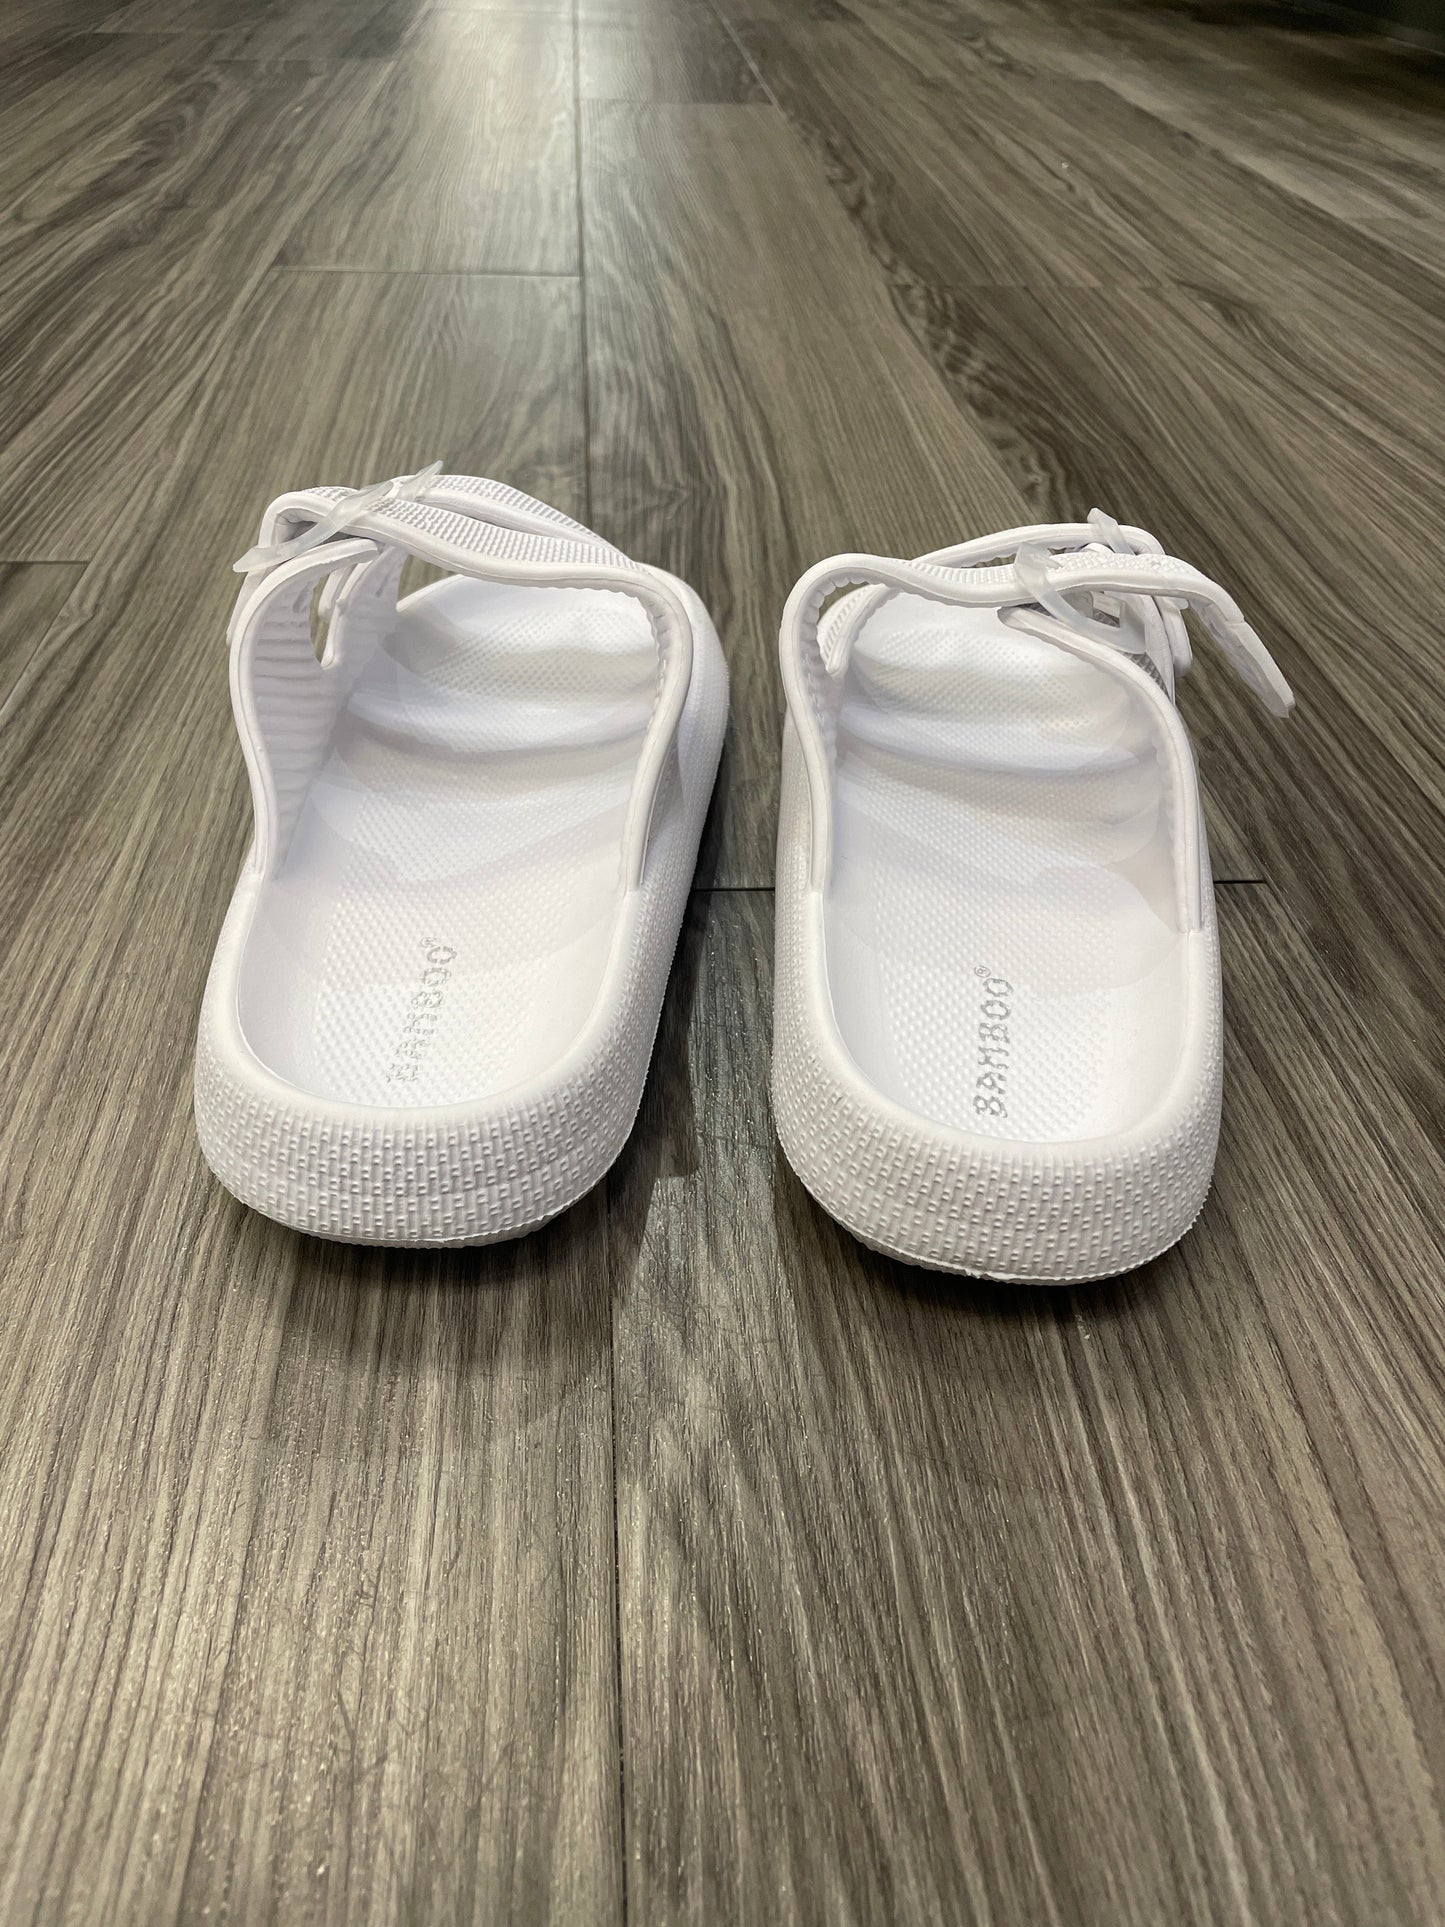 White Sandals Flip Flops Bamboo, Size 7